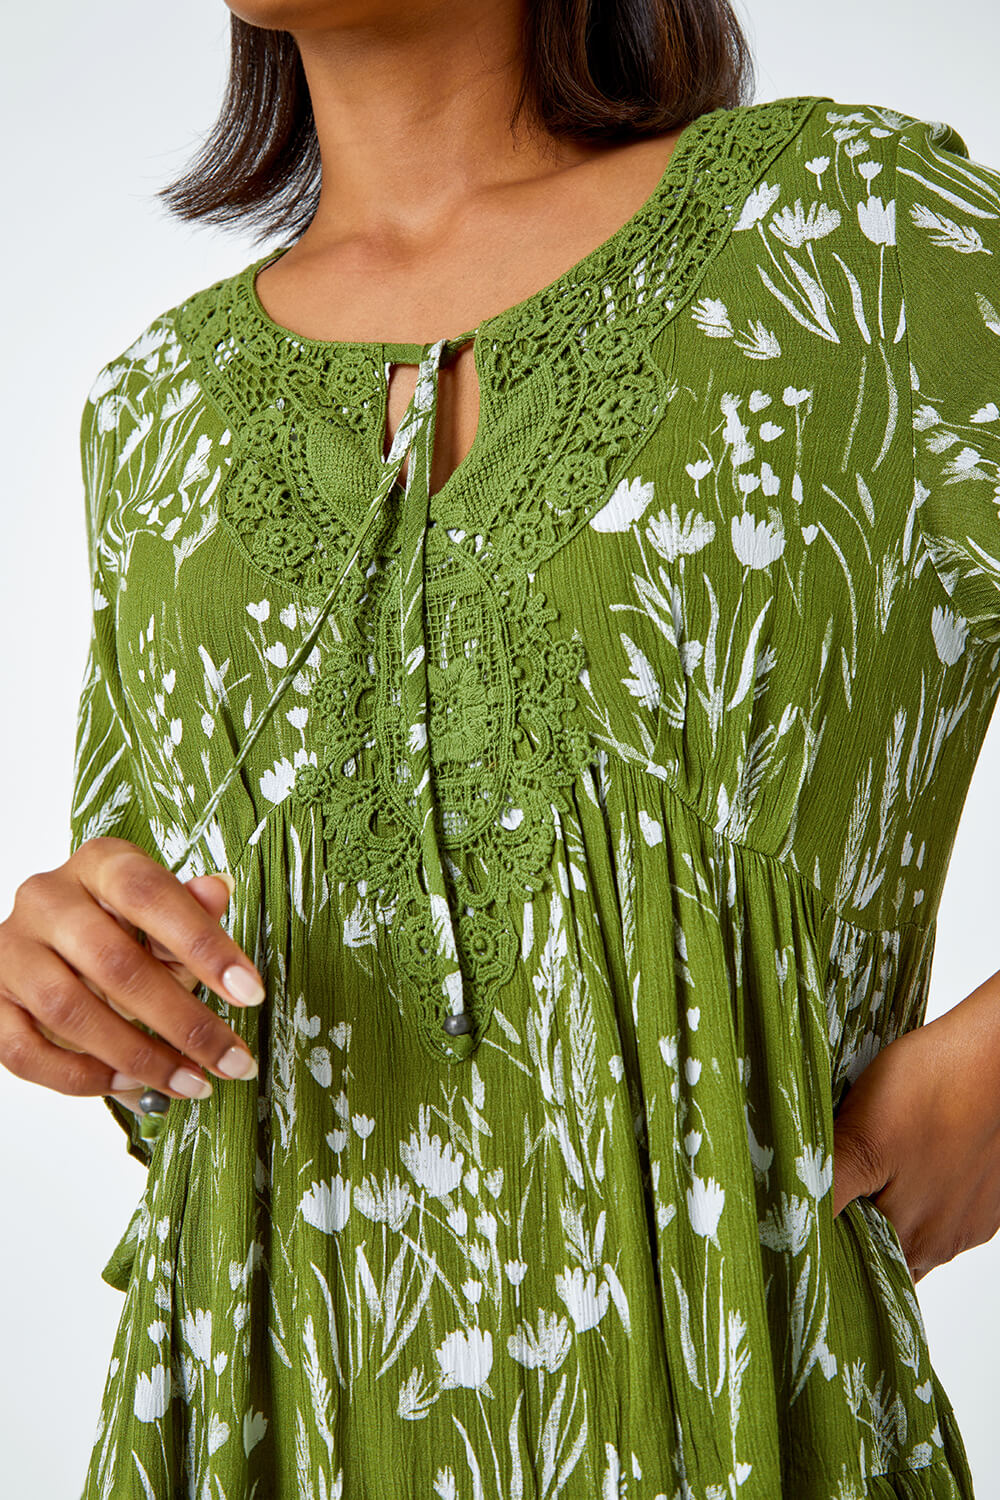 KHAKI Floral Print Lace Detail Smock Dress, Image 5 of 5